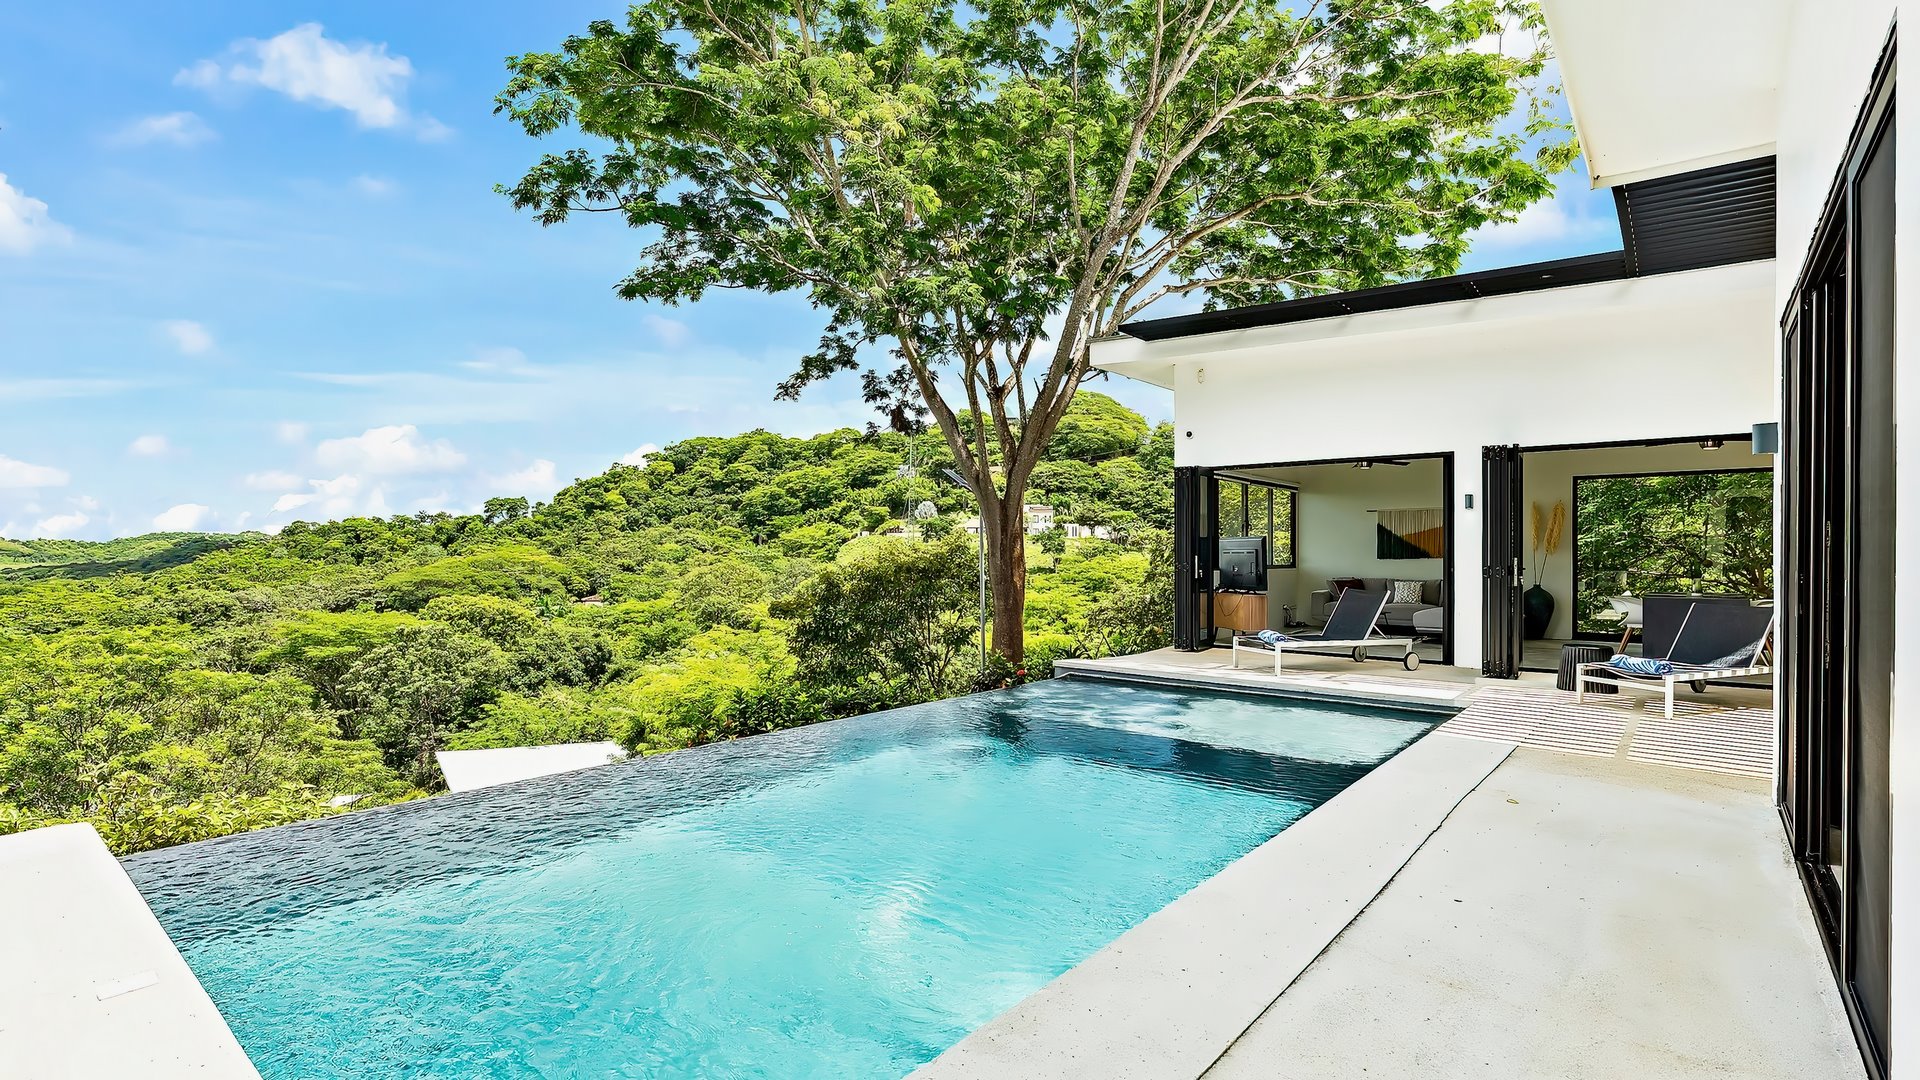 11007-La piscine de la maison principale en vente à peu de distance de Tamarindo au Costa Rica